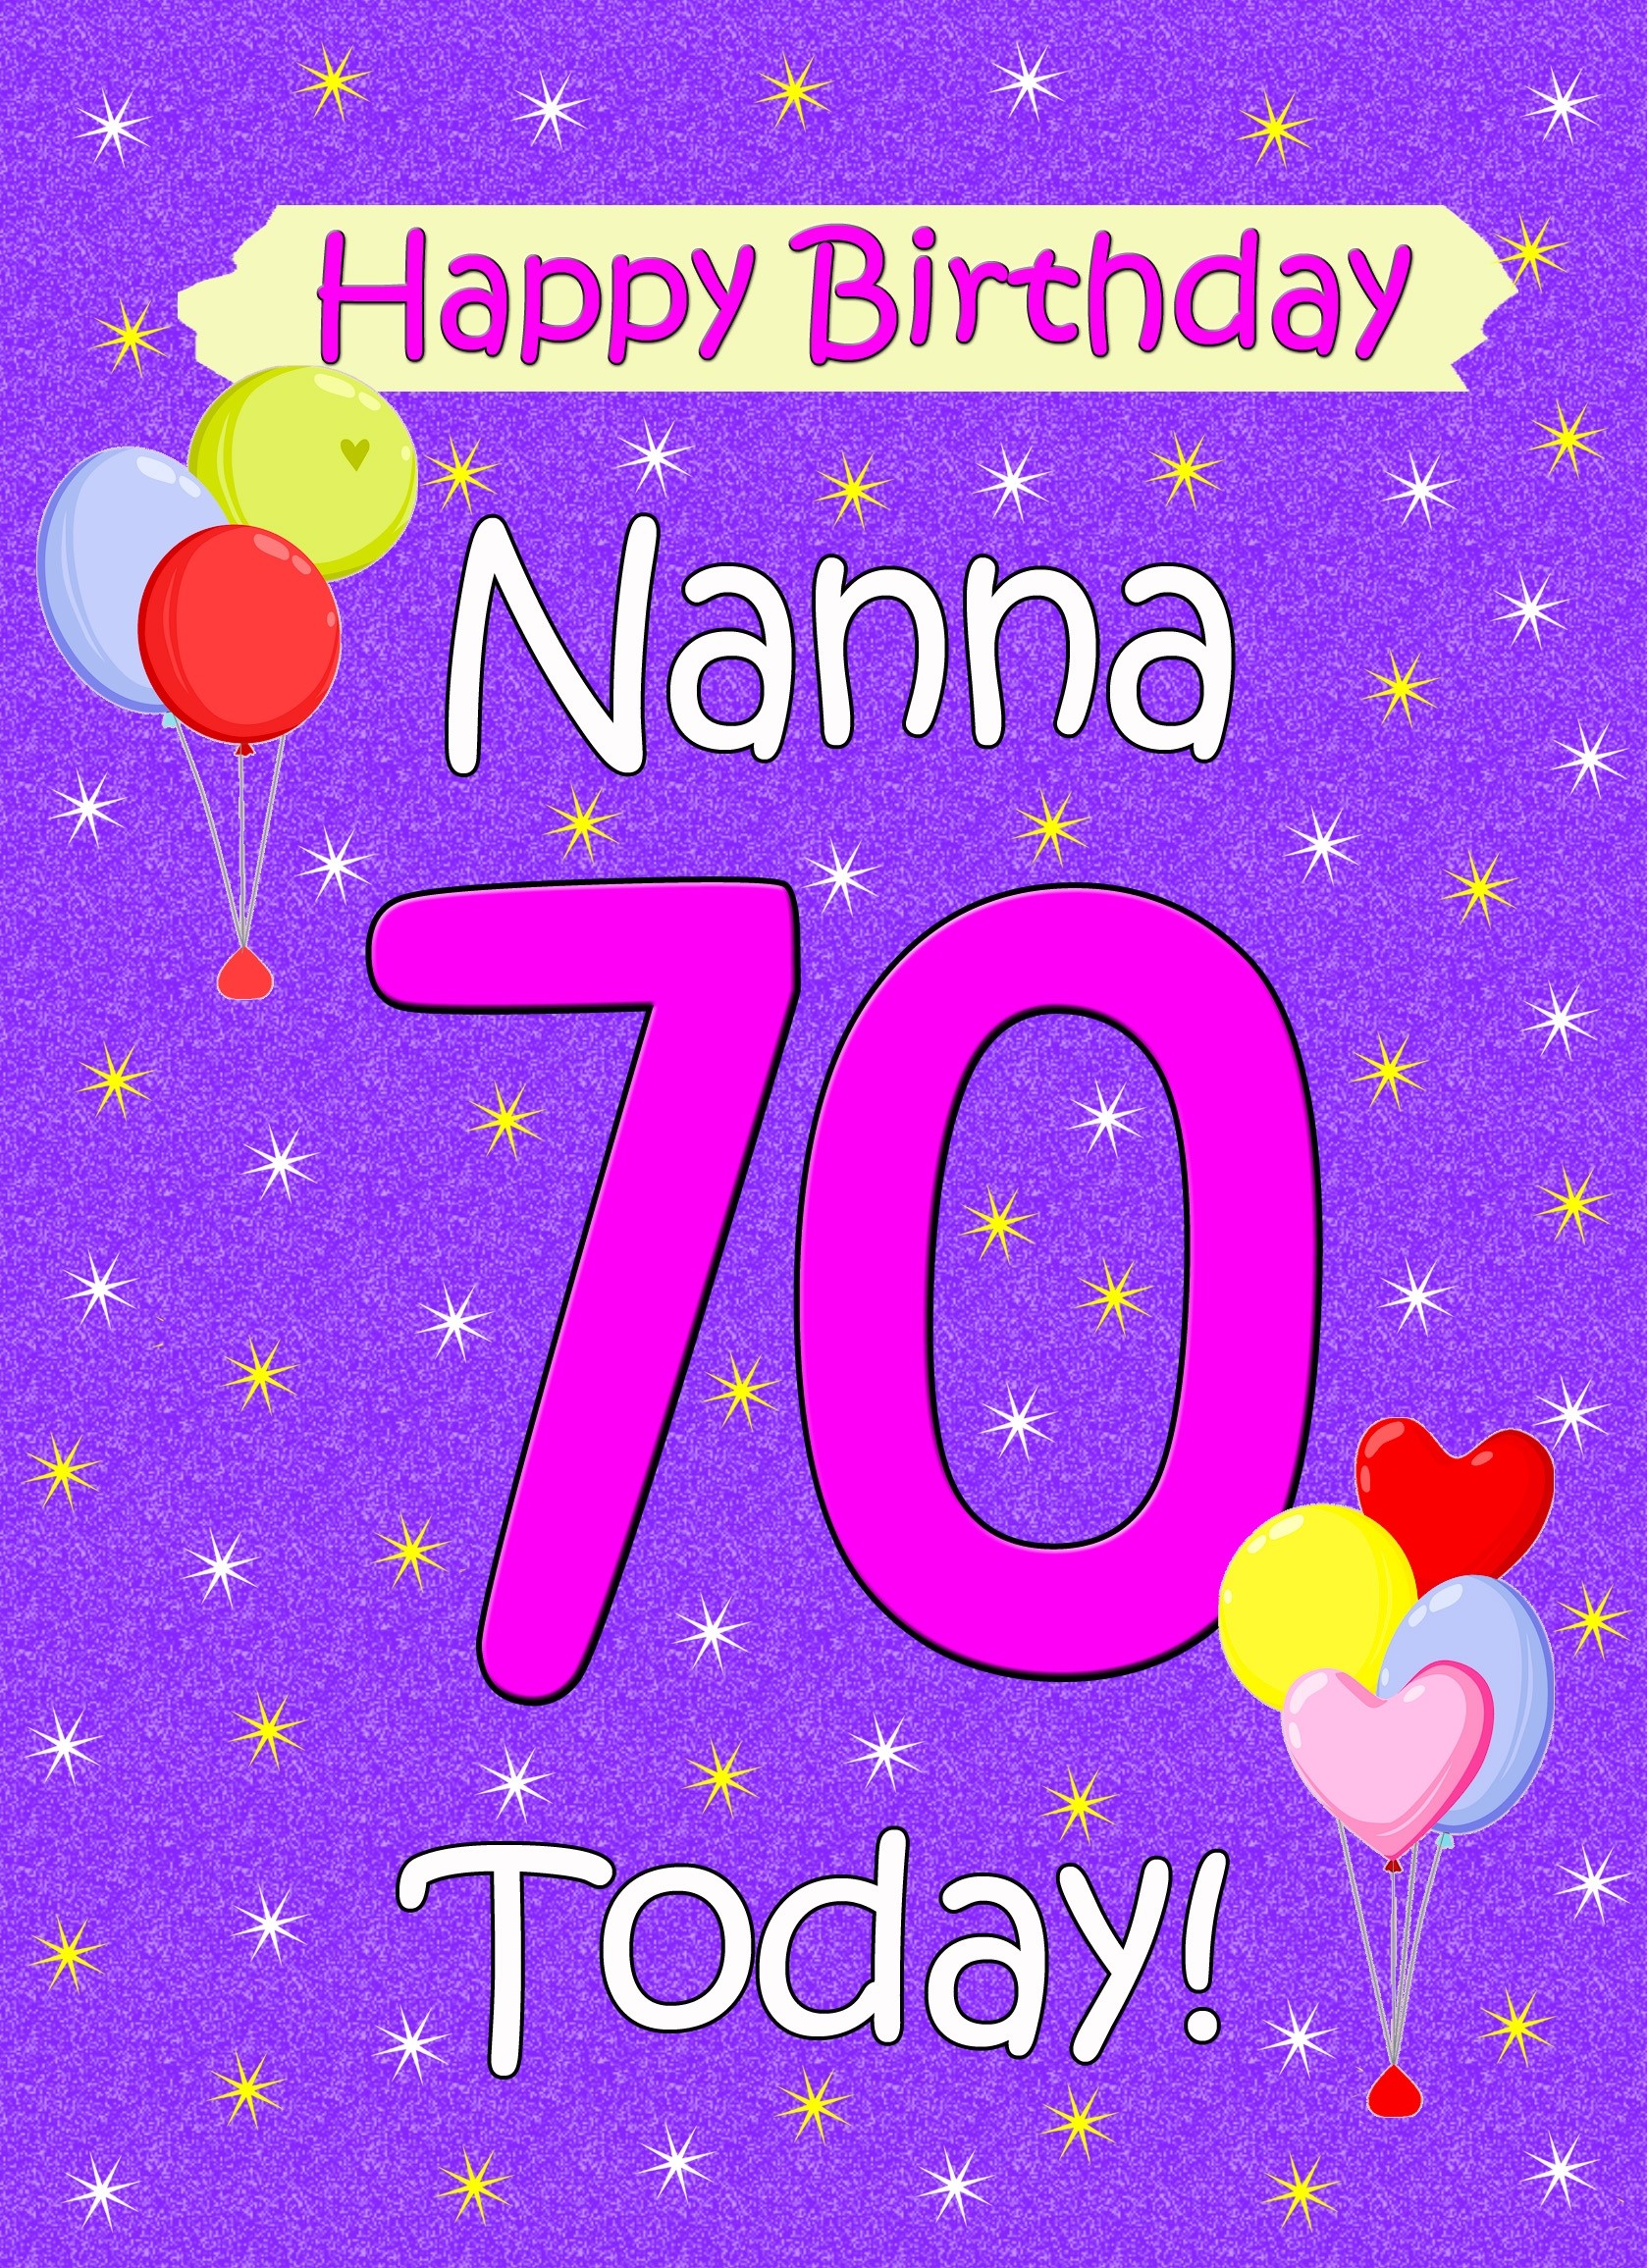 Nanna 70th Birthday Card (Lilac)